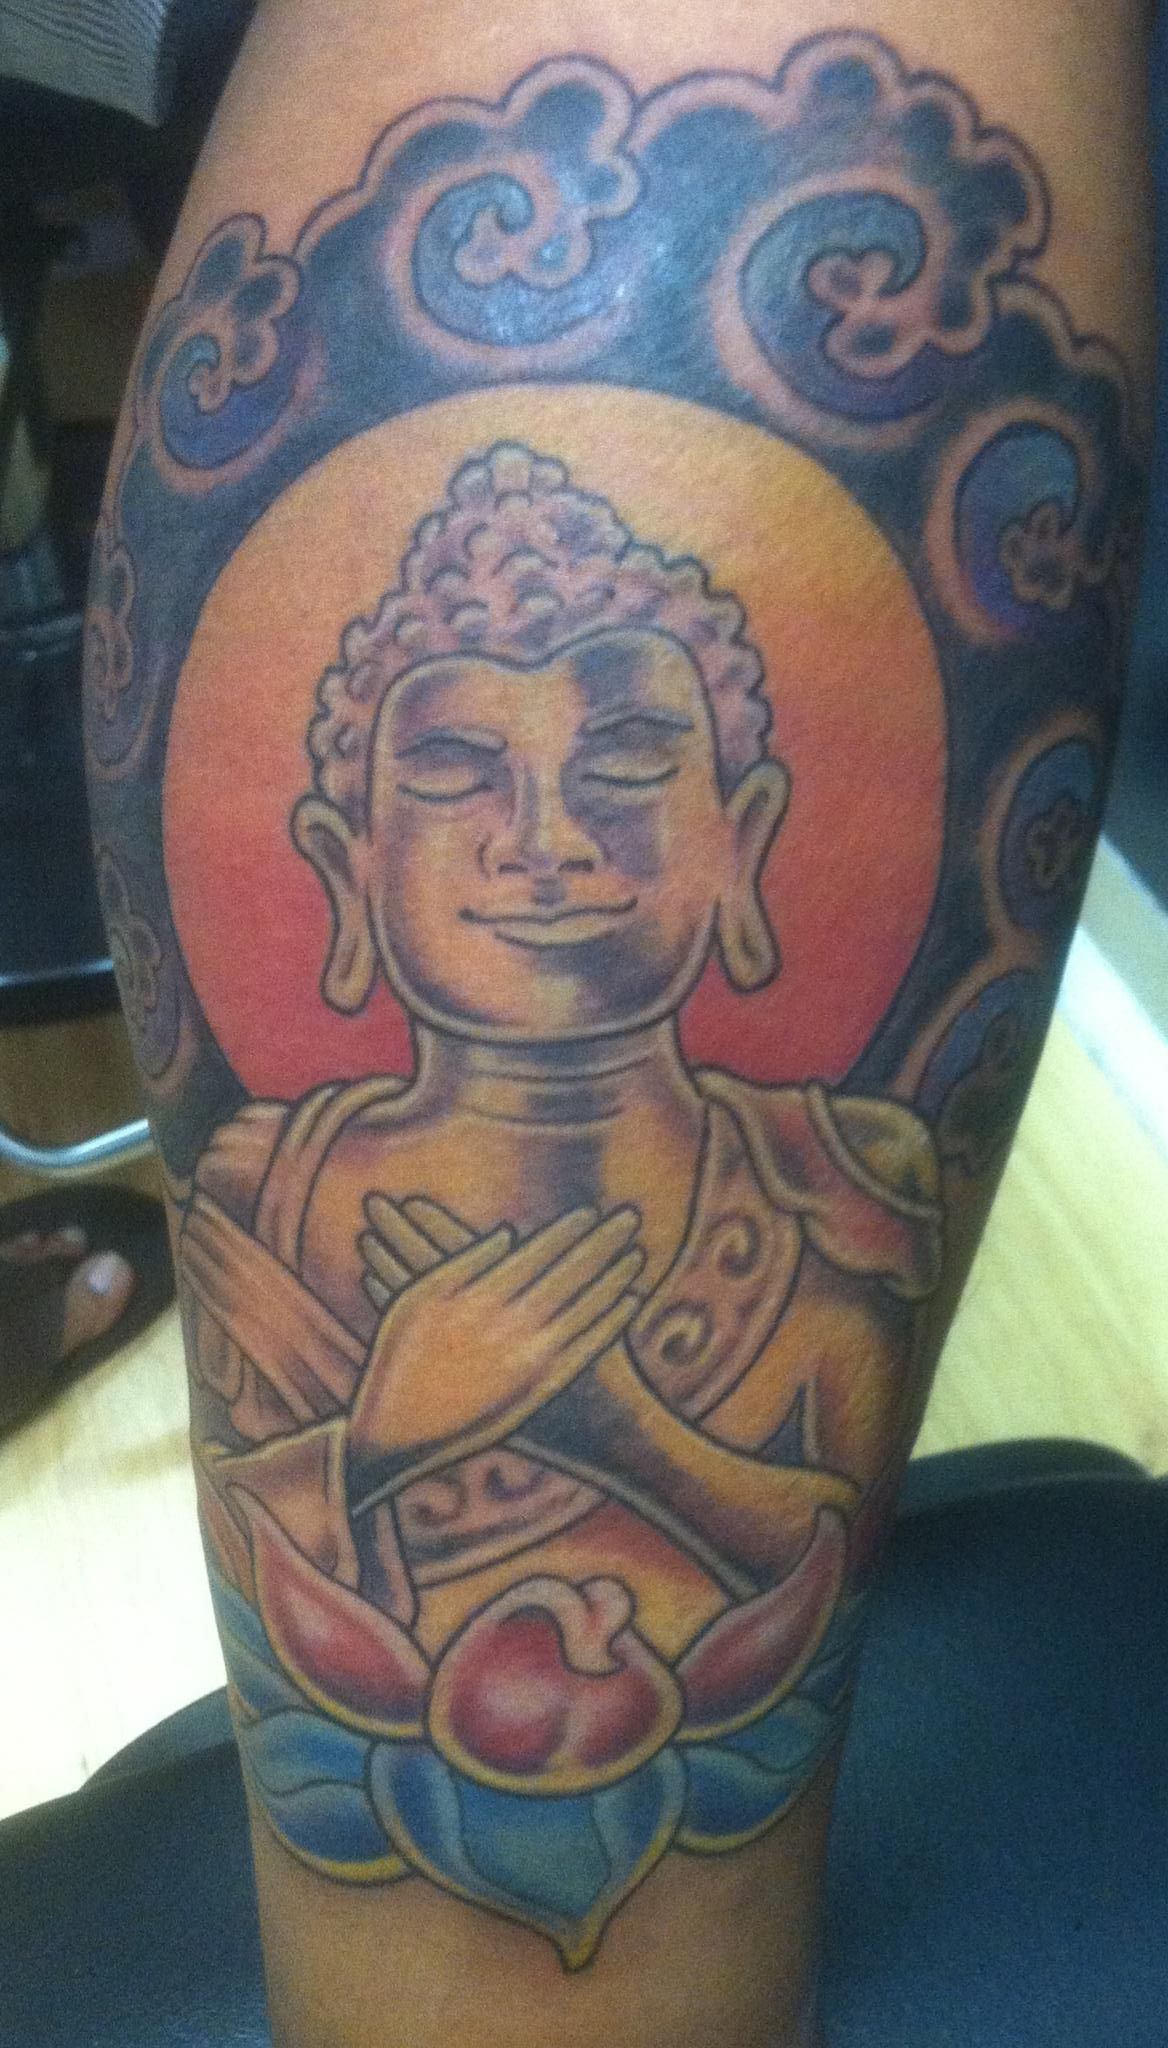 Buddah tattoo copy 2.jpg